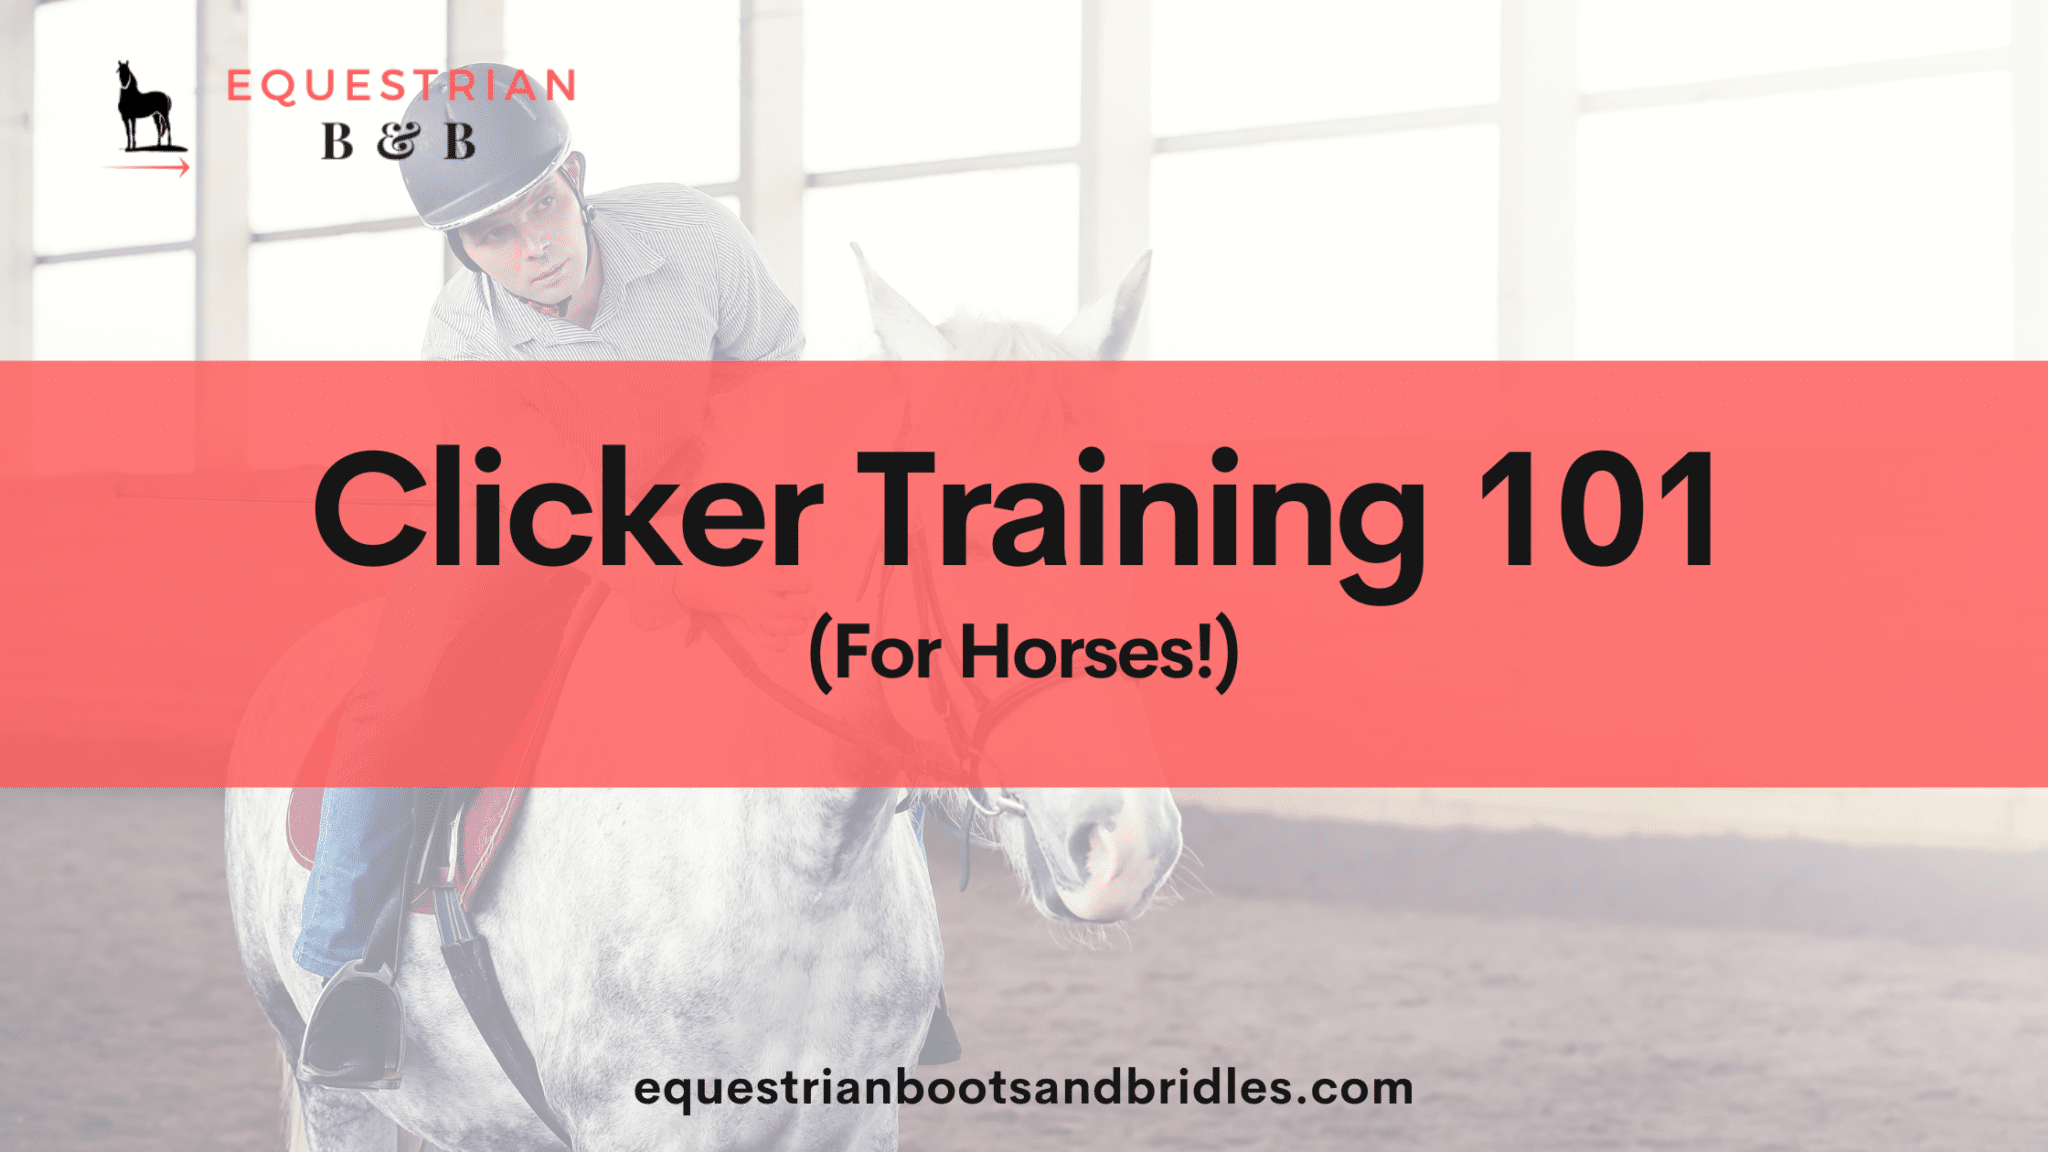 clicker training for horses on equestrianbootsandbridles.com